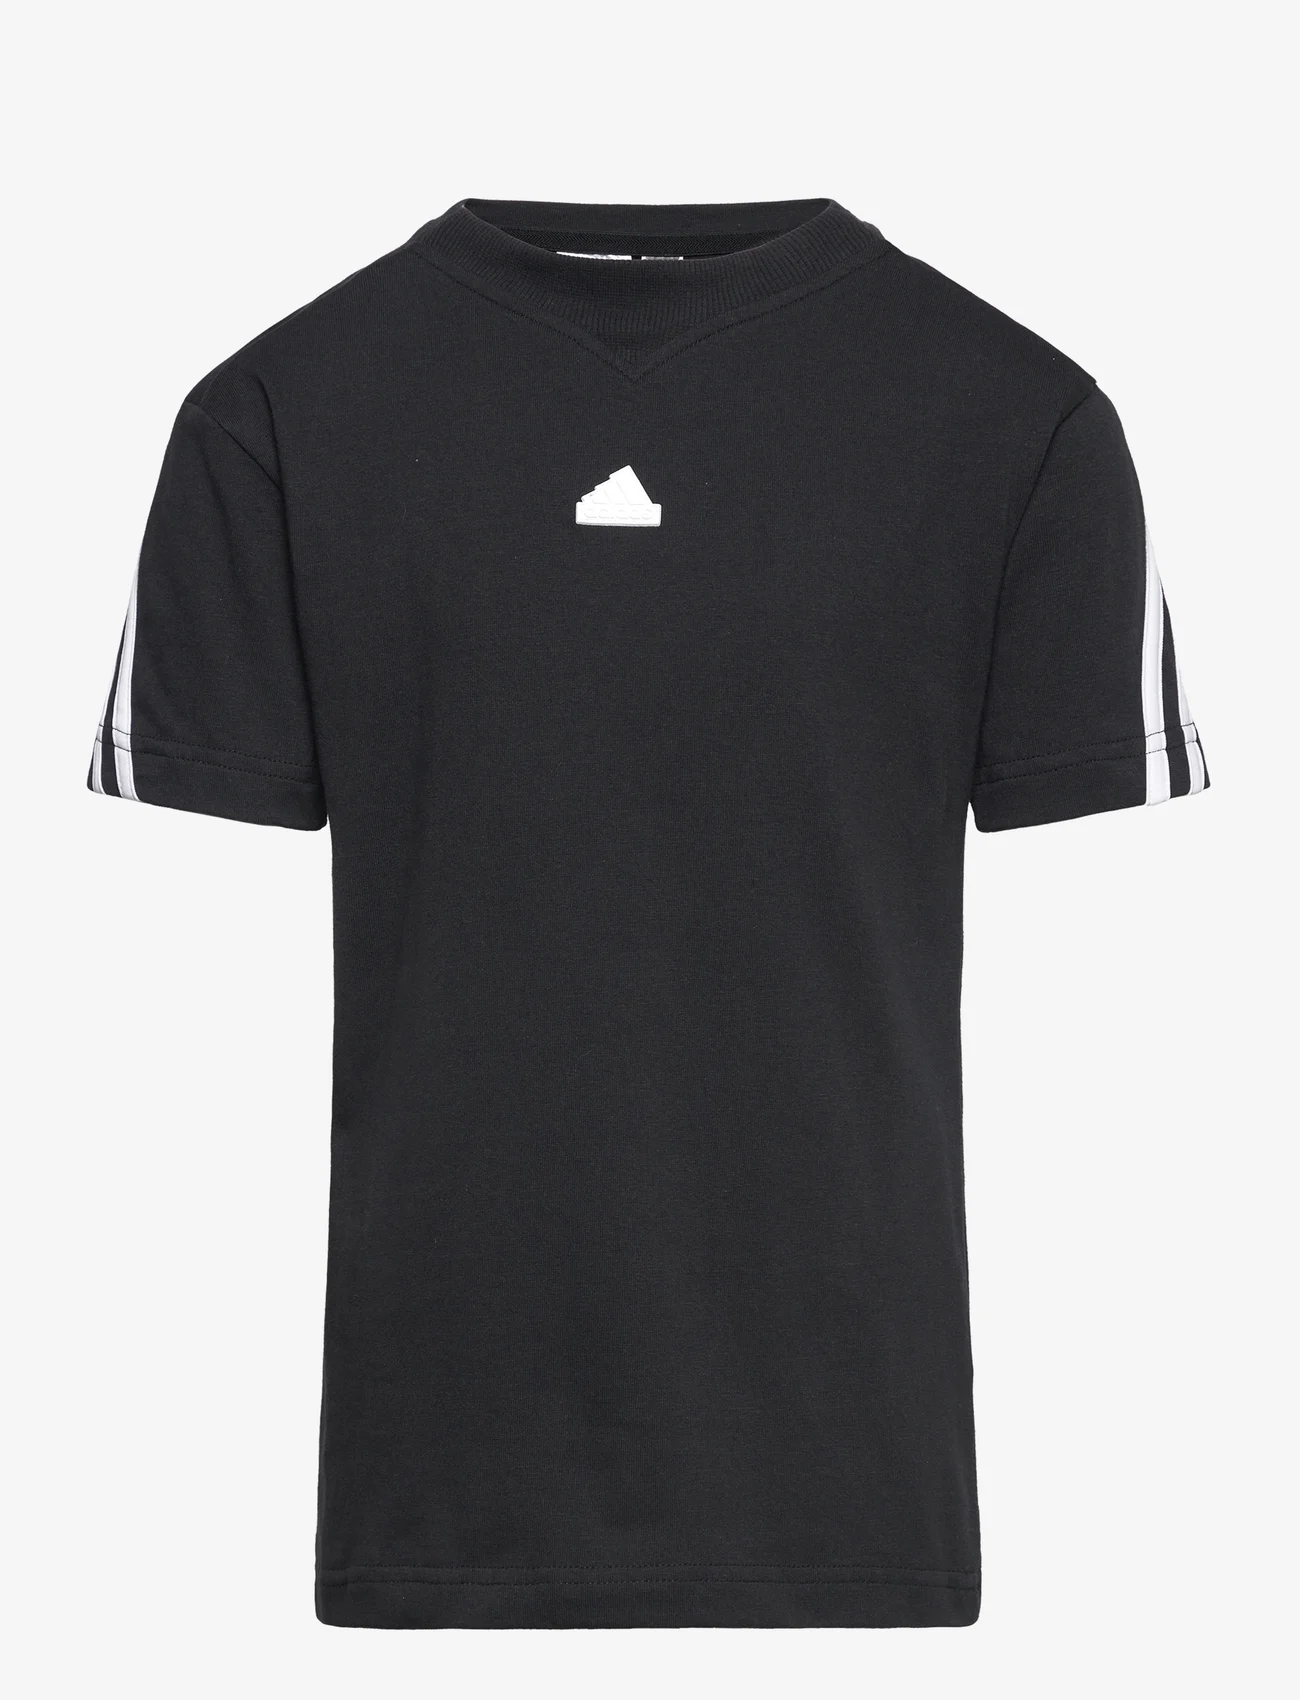 adidas Performance - U FI 3S T - kortærmede t-shirts - black/white - 0